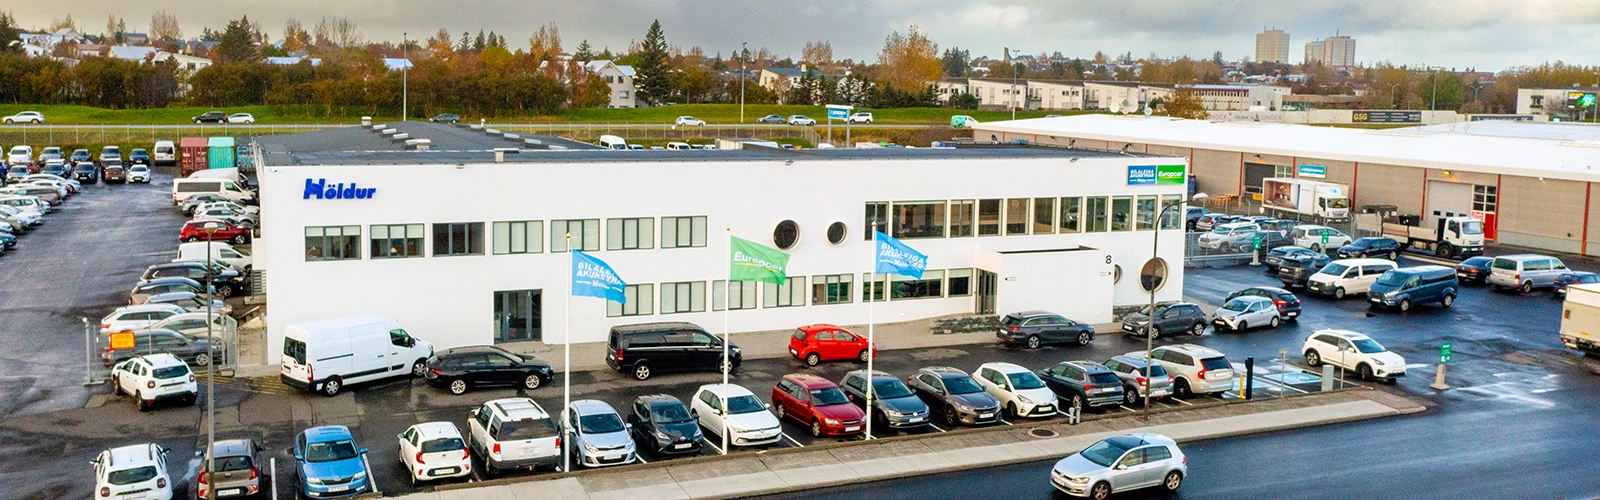 Europcar car rental station Skutuvogur4 in Reykjavik